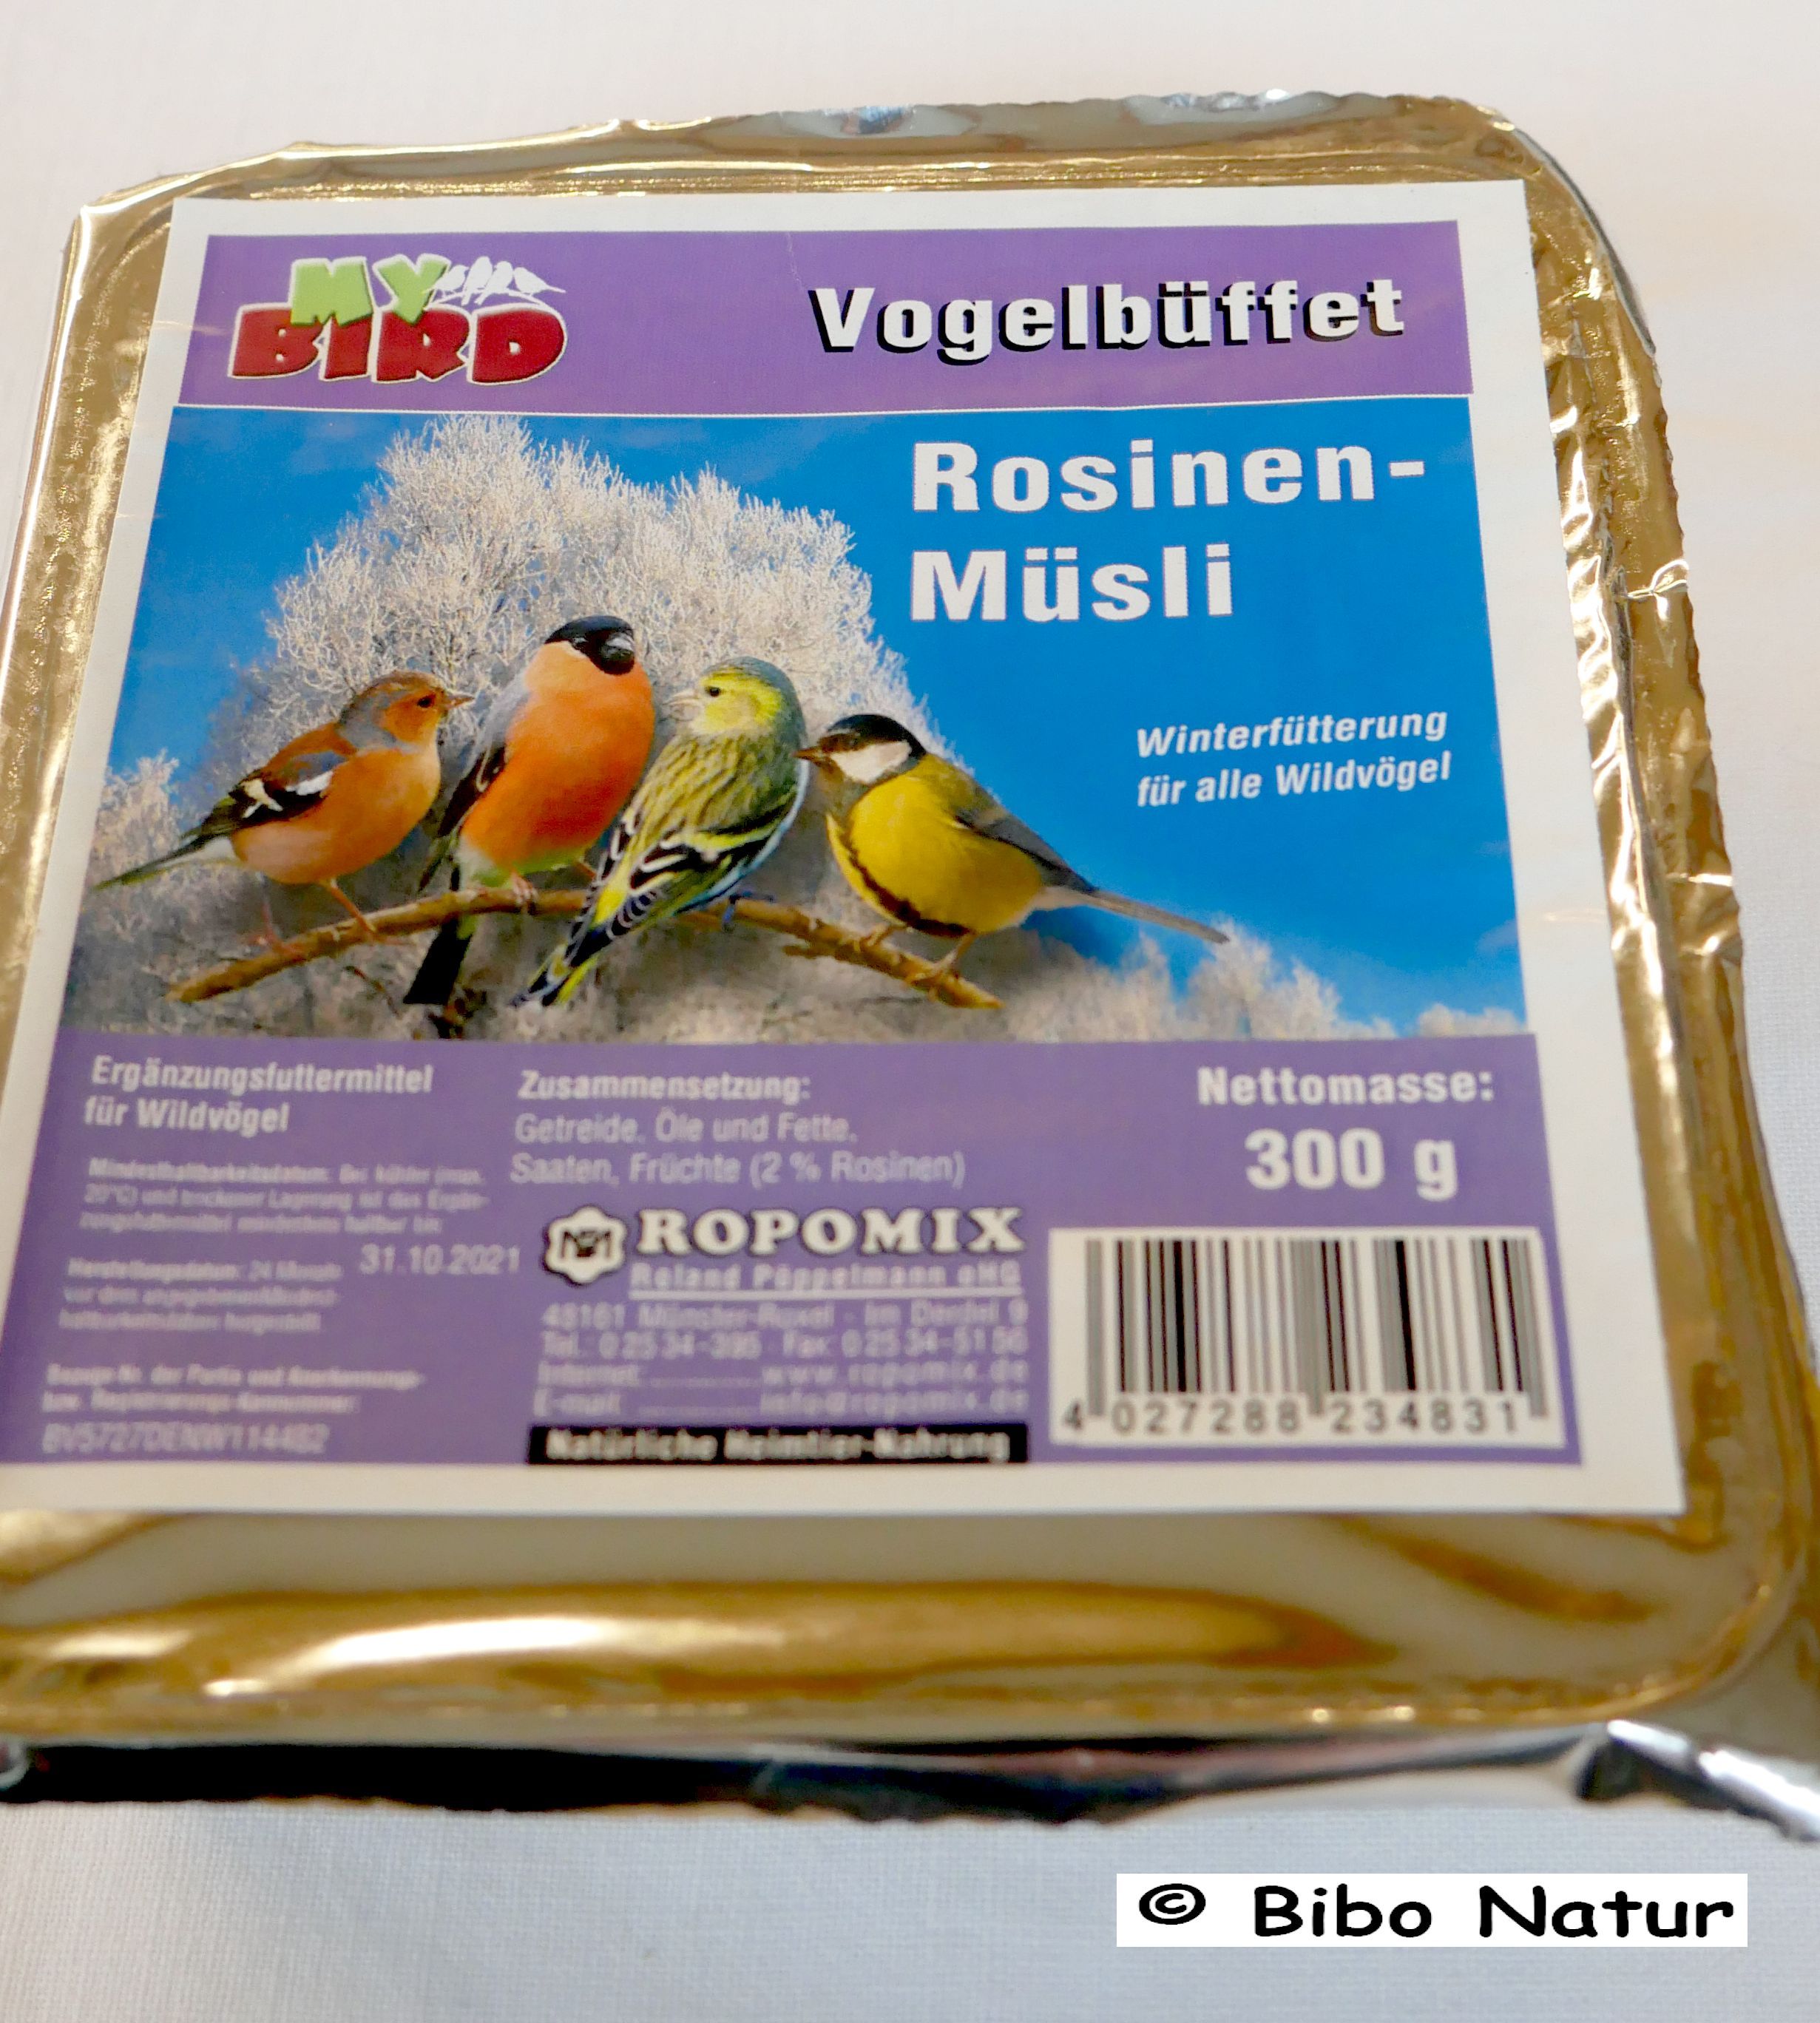 My Bird Vogelbüffet Rosinen-Müsli